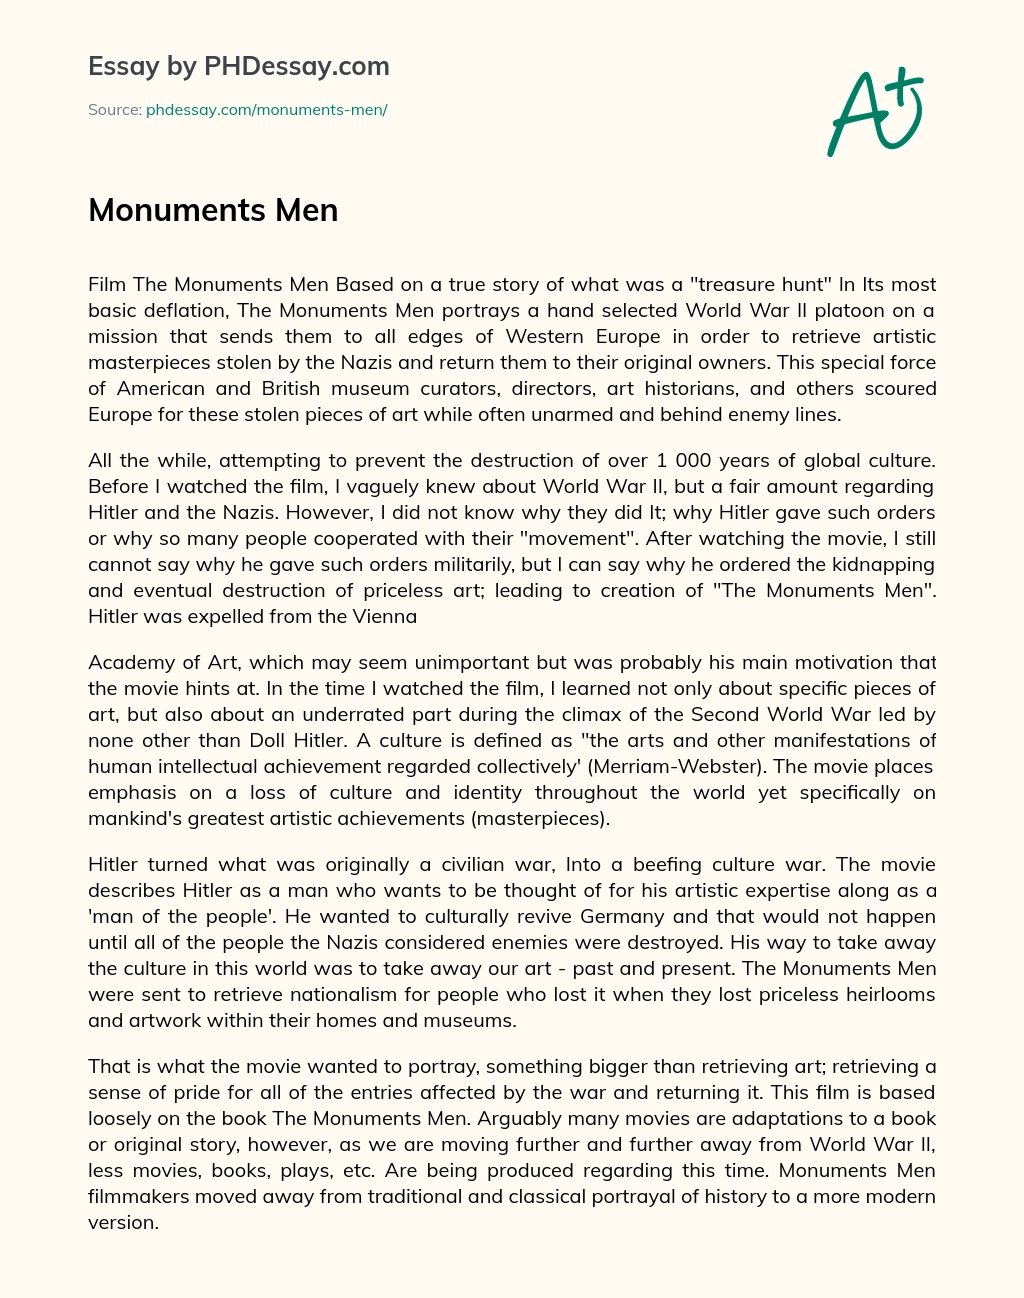 Monuments Men essay